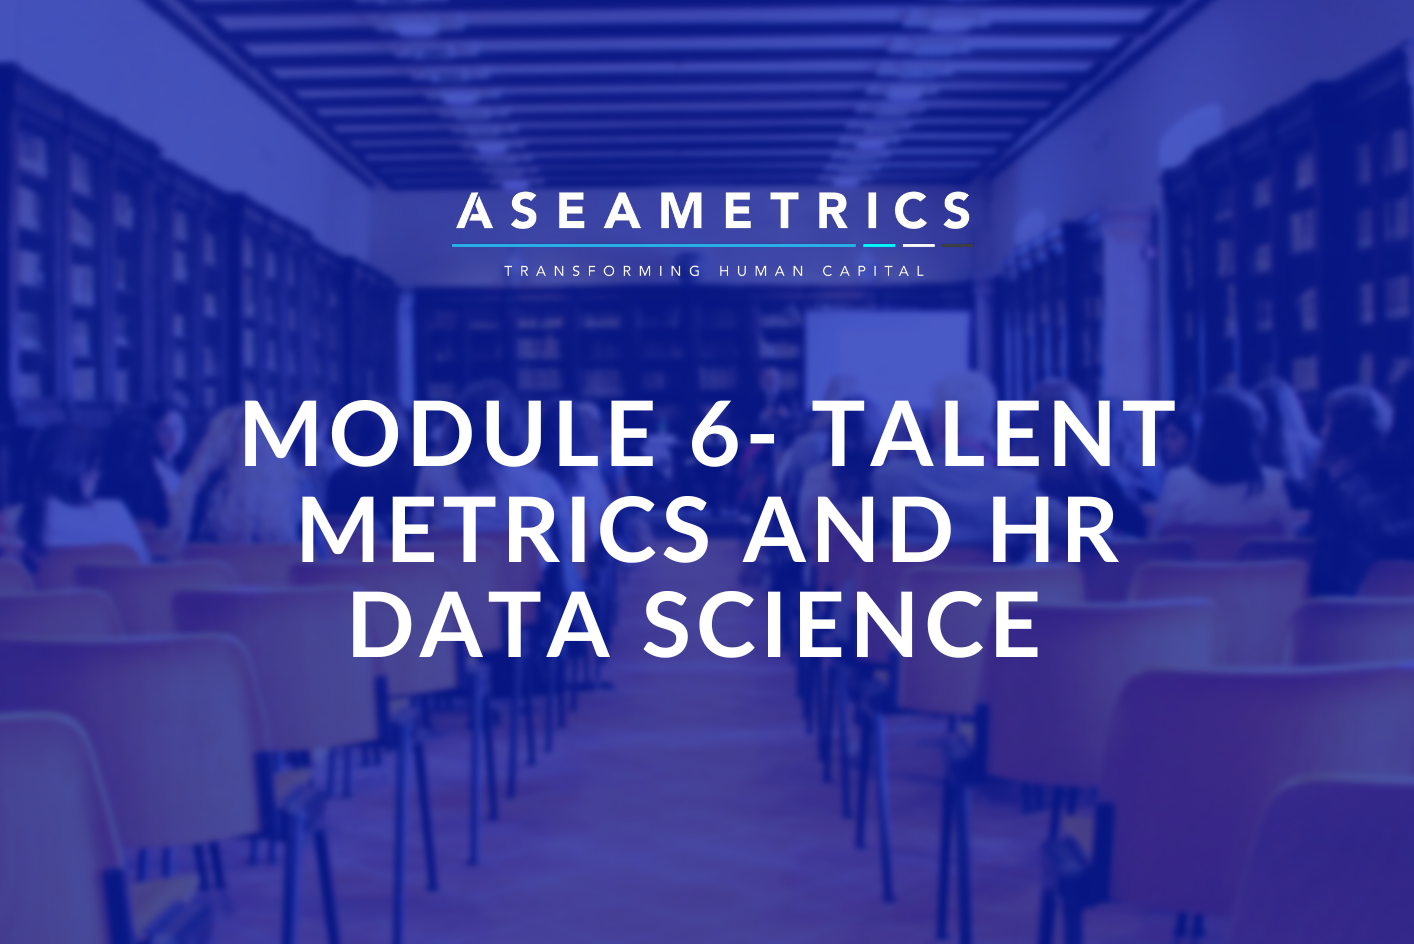 MODULE 6- TALENT METRICS AND HR DATA SCIENCE